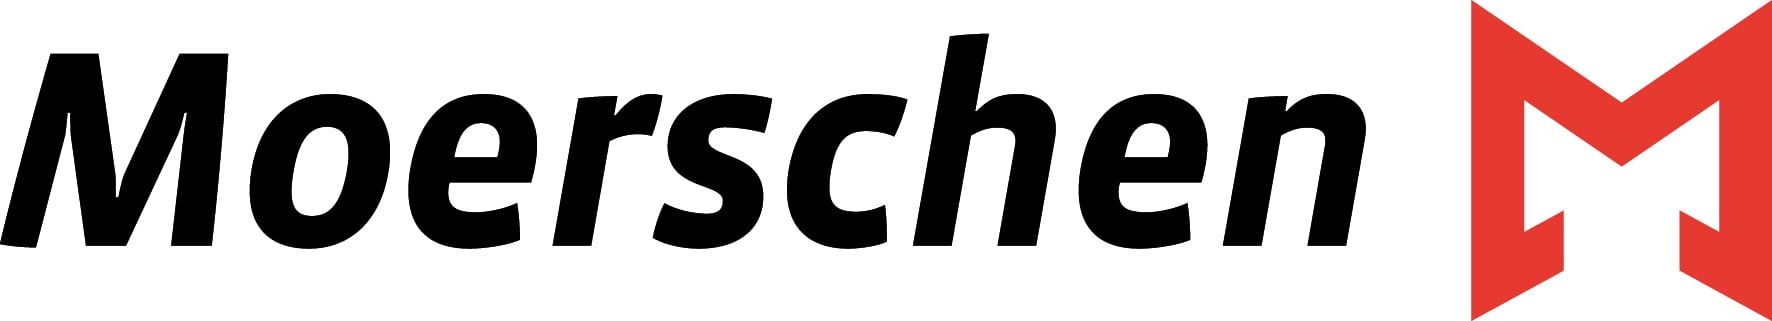 Moerschen-Logo_RGB